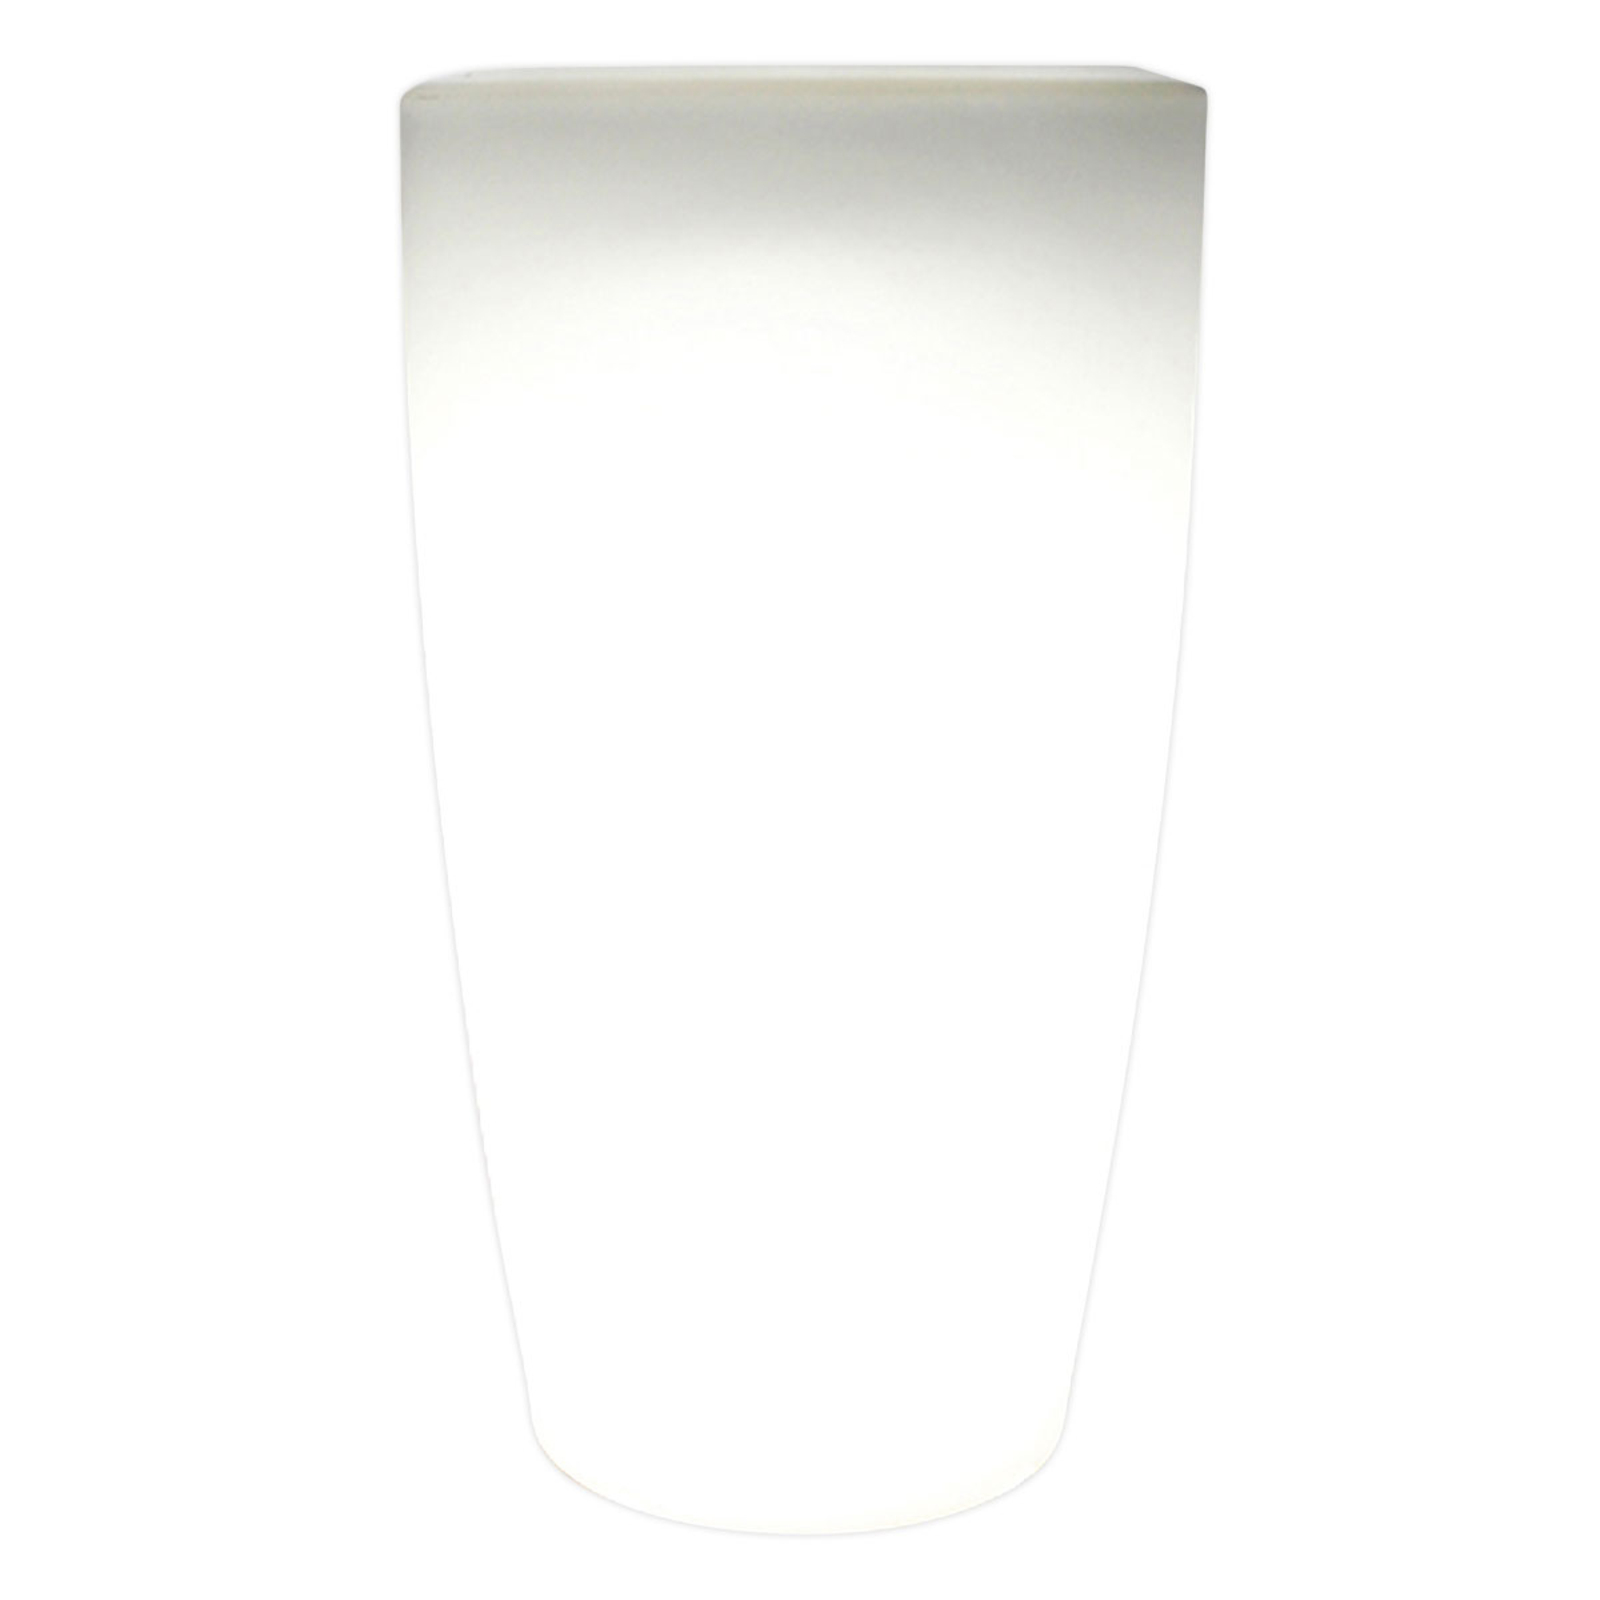 Rovio III deco lamp, plantable, white translucent